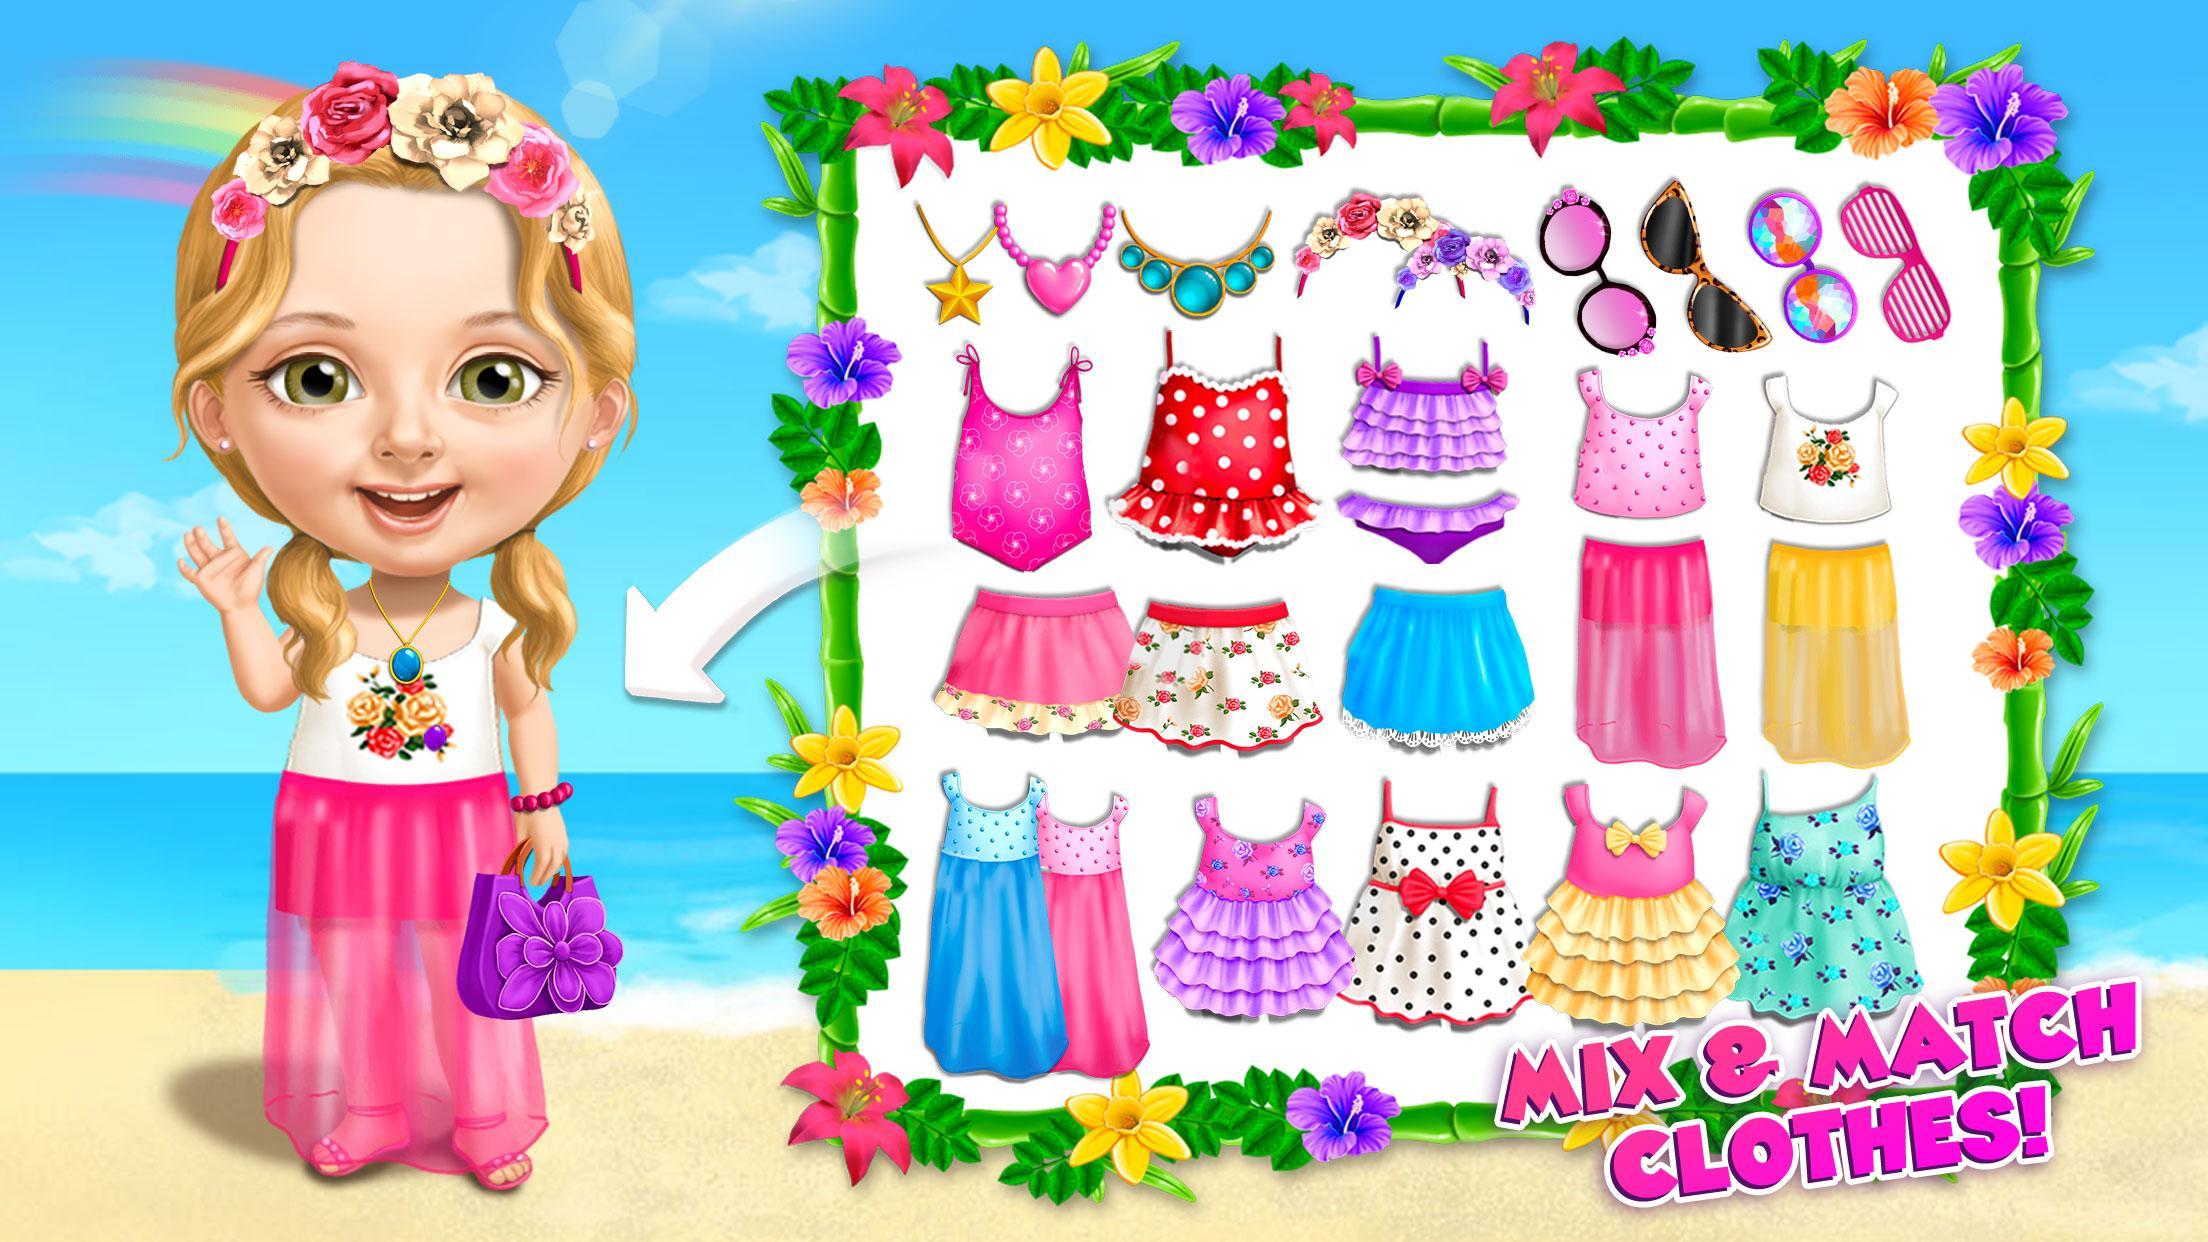 Sweet Baby Girl Summer Fun 2 - Sunny Makeover Game 7.0.1511 Screenshot 3